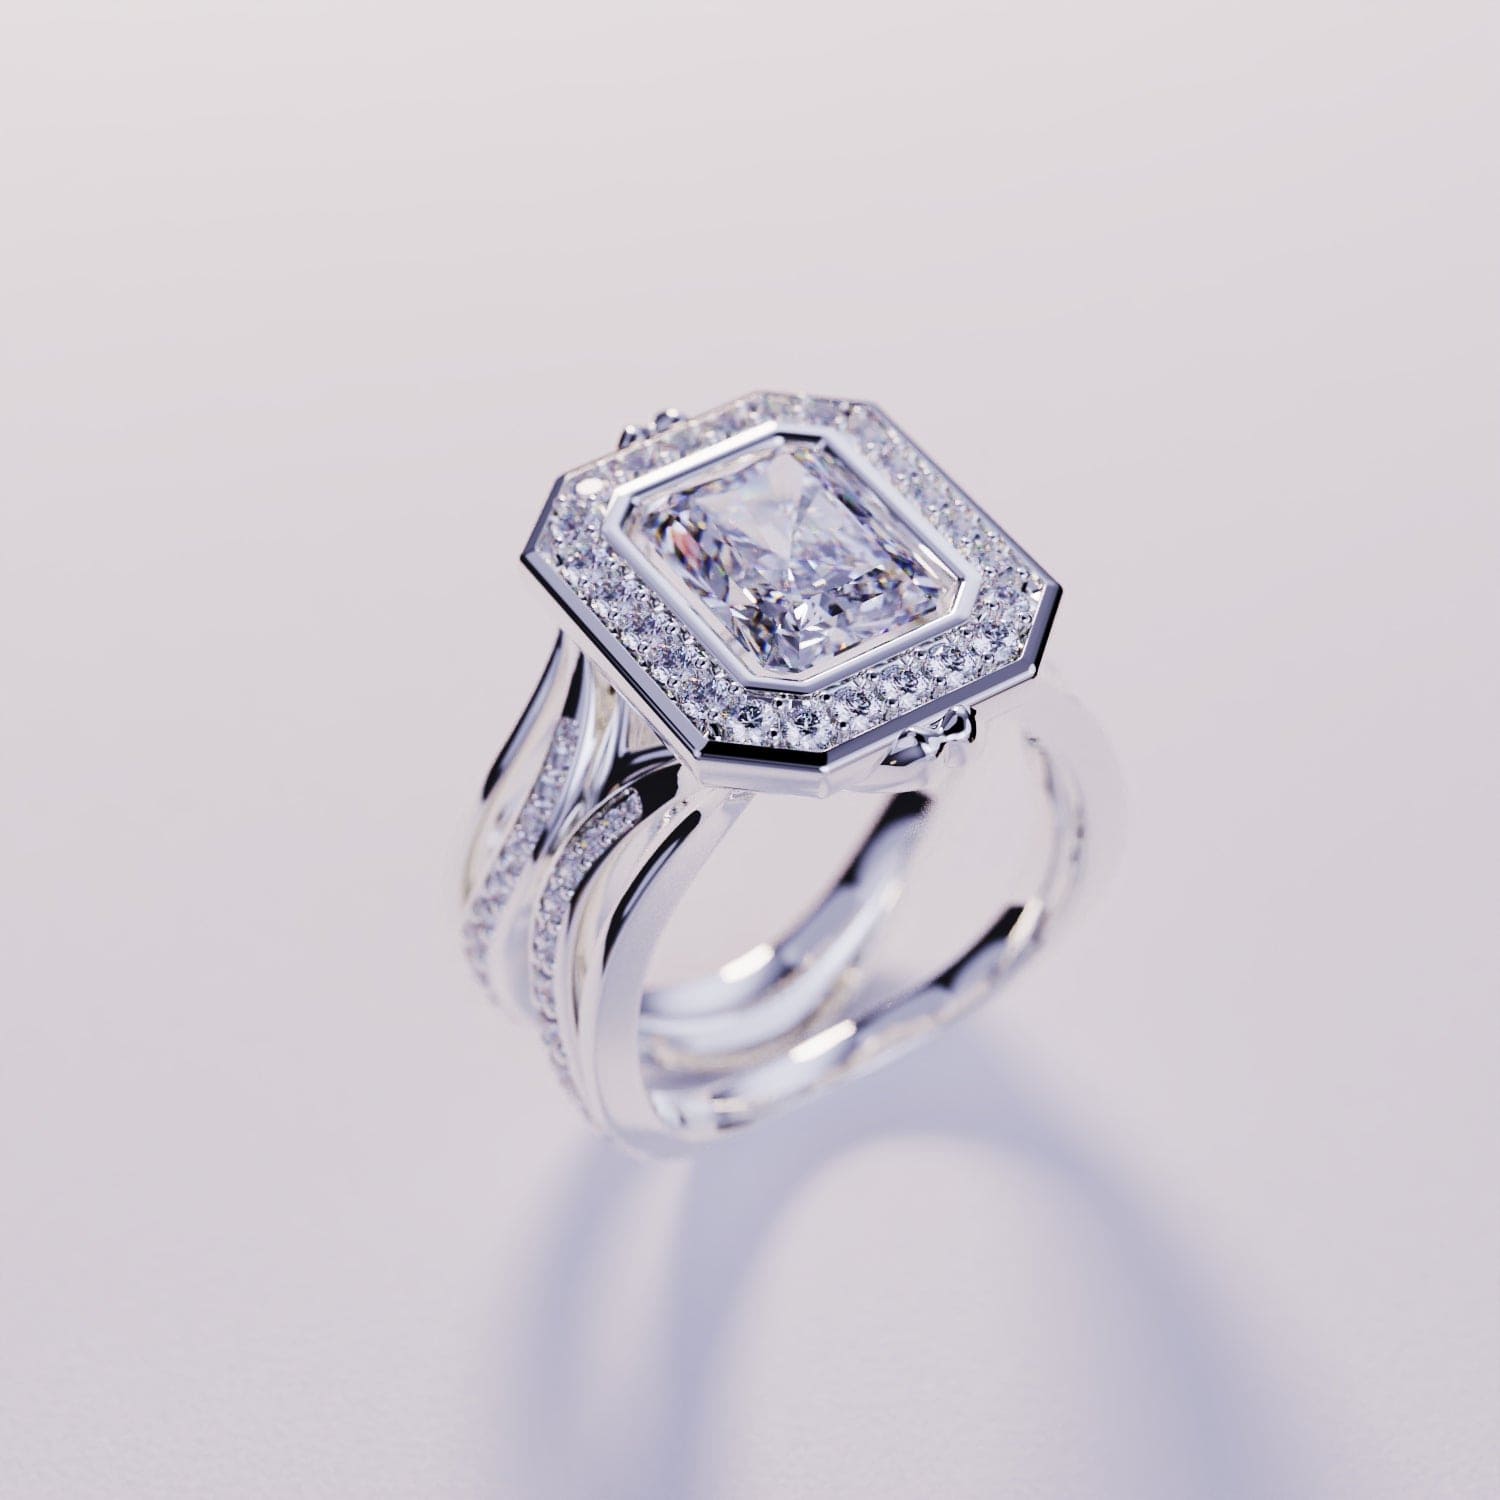 Elysian Glow: Emerald-Cut Diamond Ring - S925 Sterling Silver